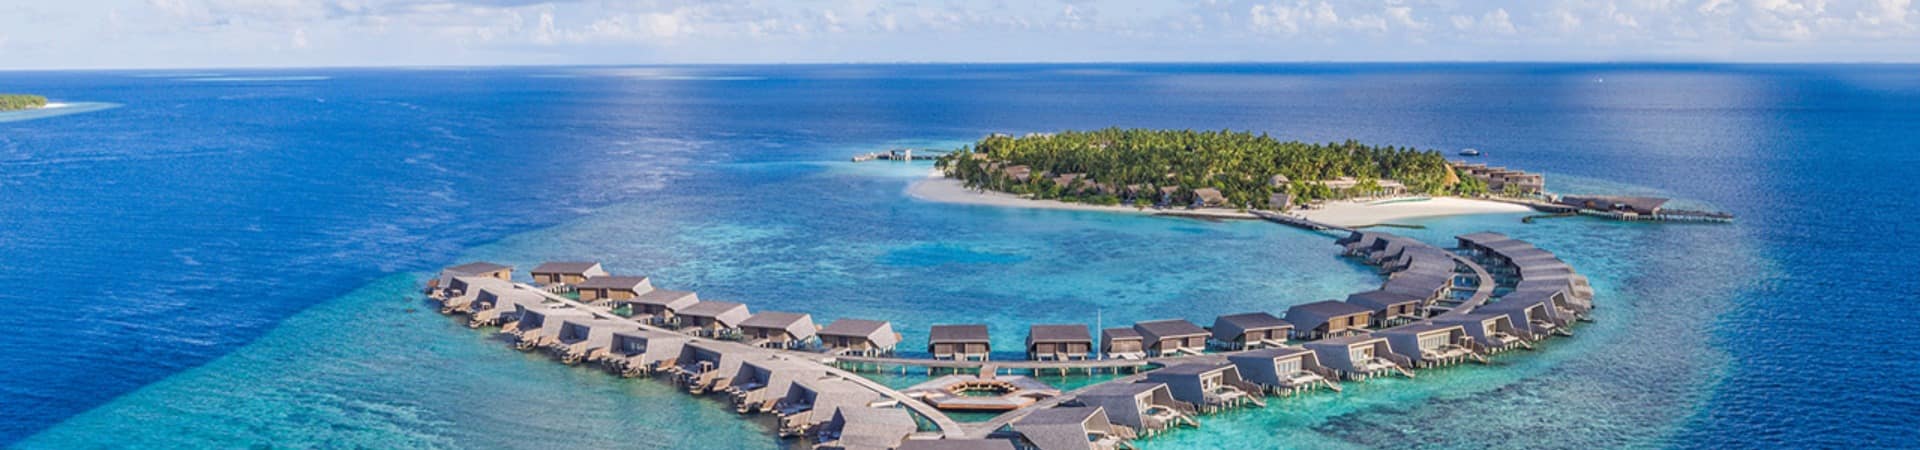 St regis maldives vommuli vista aerea